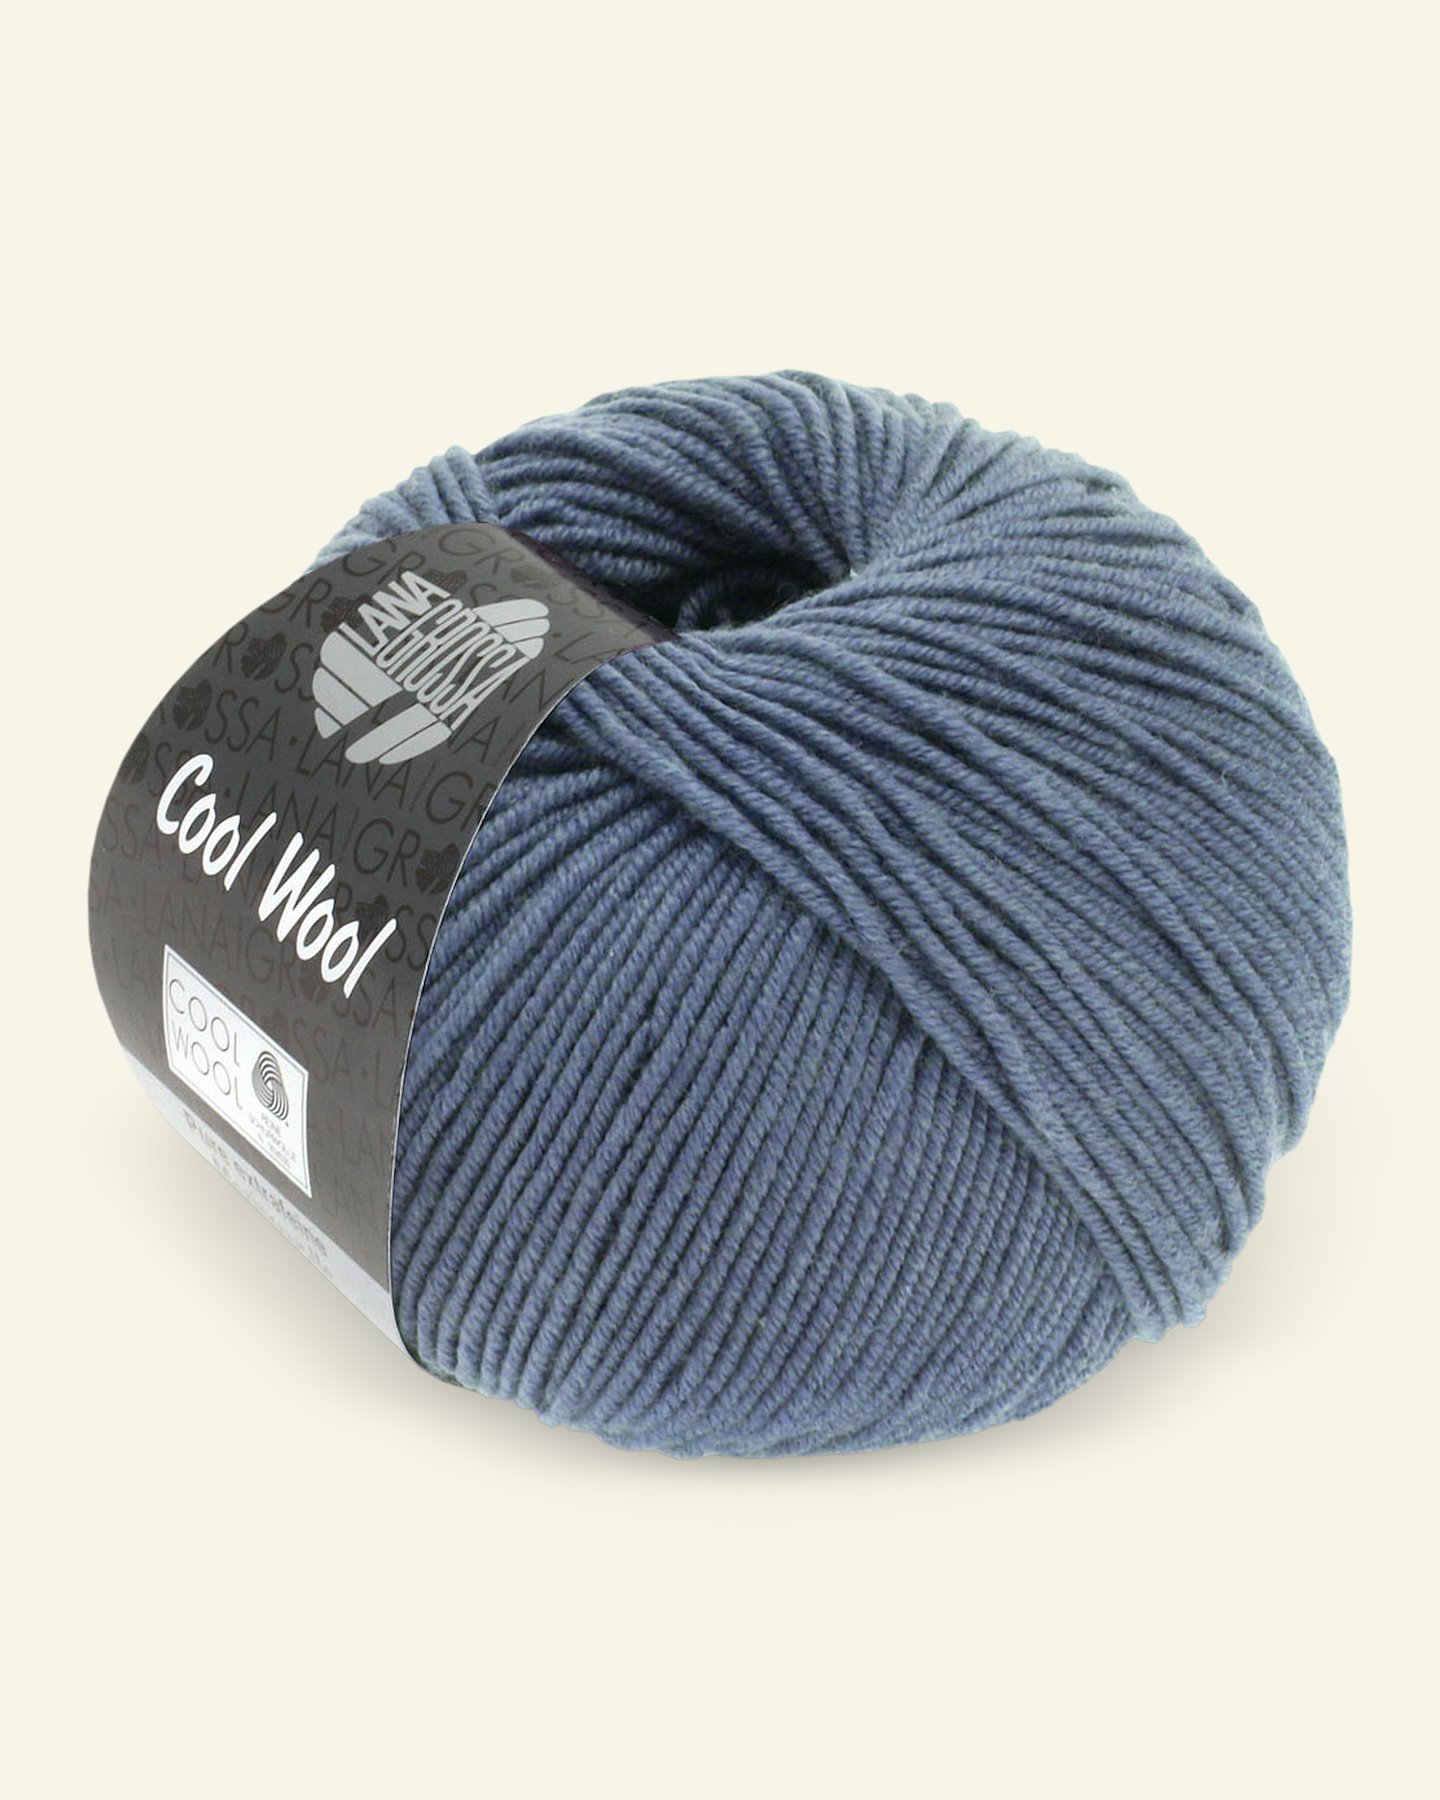 Lana Grossa, extrafine merino wool yarn "Cool Wool", greyblue 90001122_pack